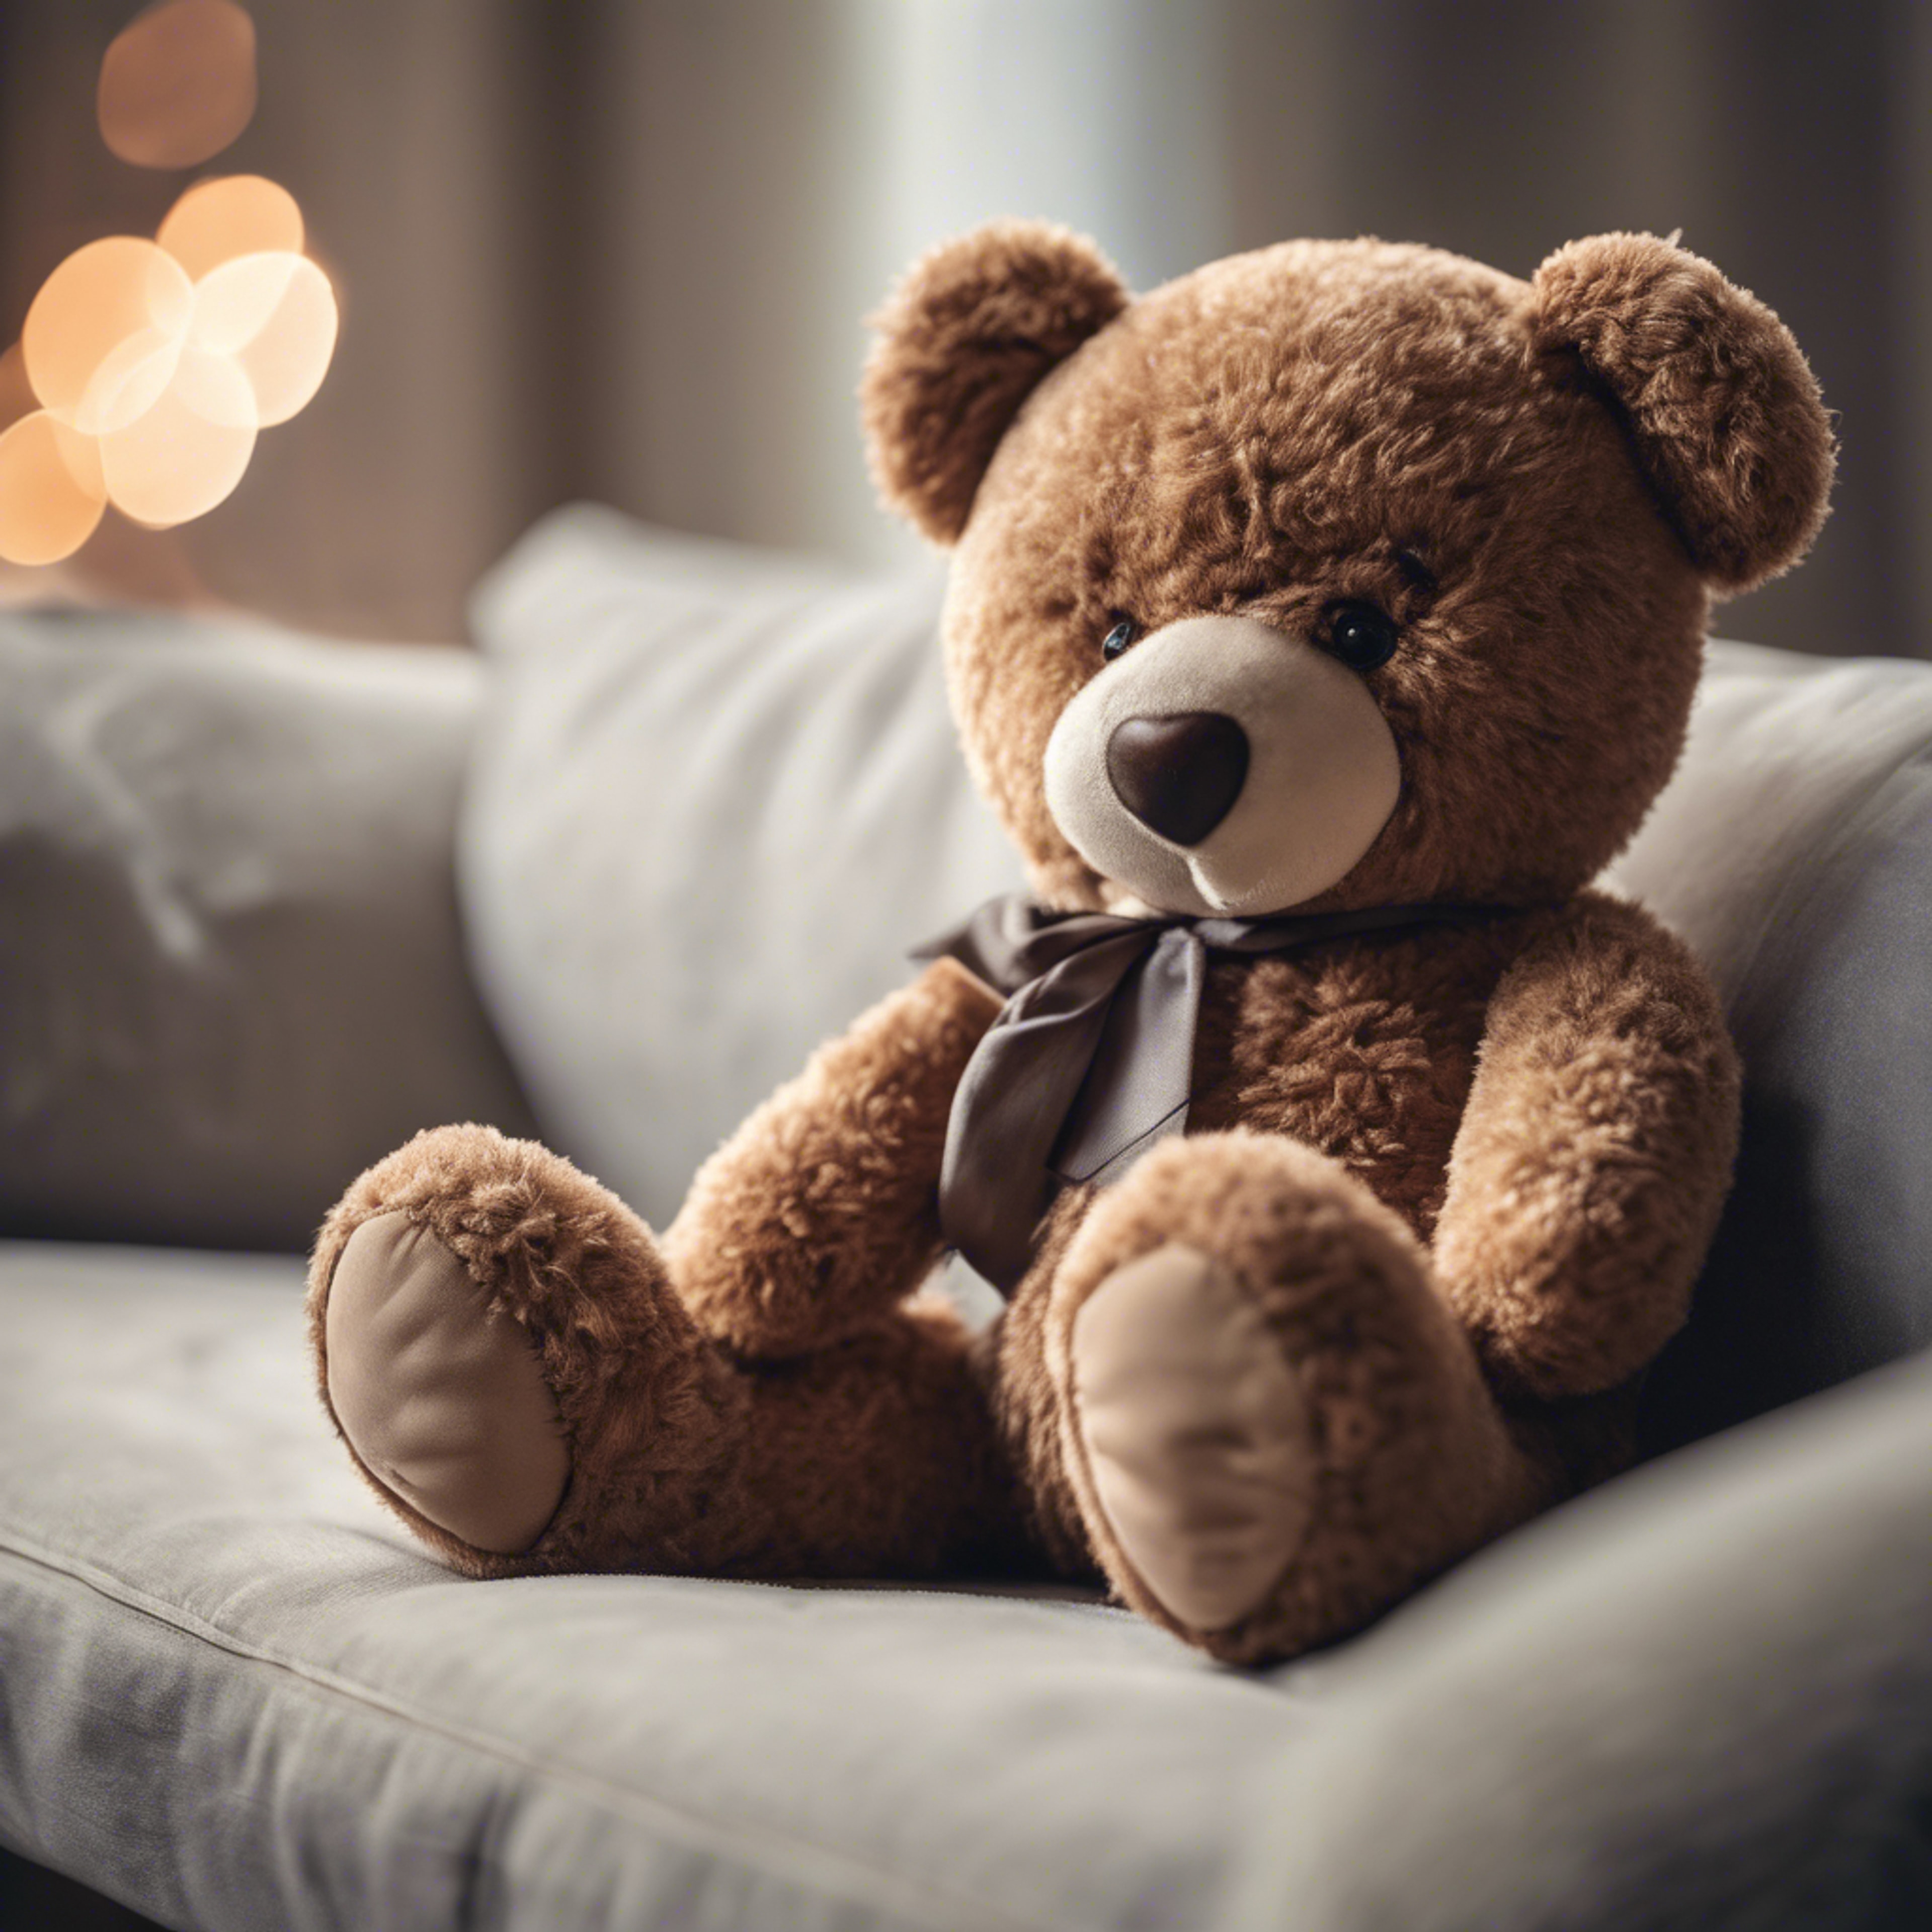 A soft teddy bear holding a brown, heart-shaped cushion. Ფონი[e840707edcb14c4d8997]